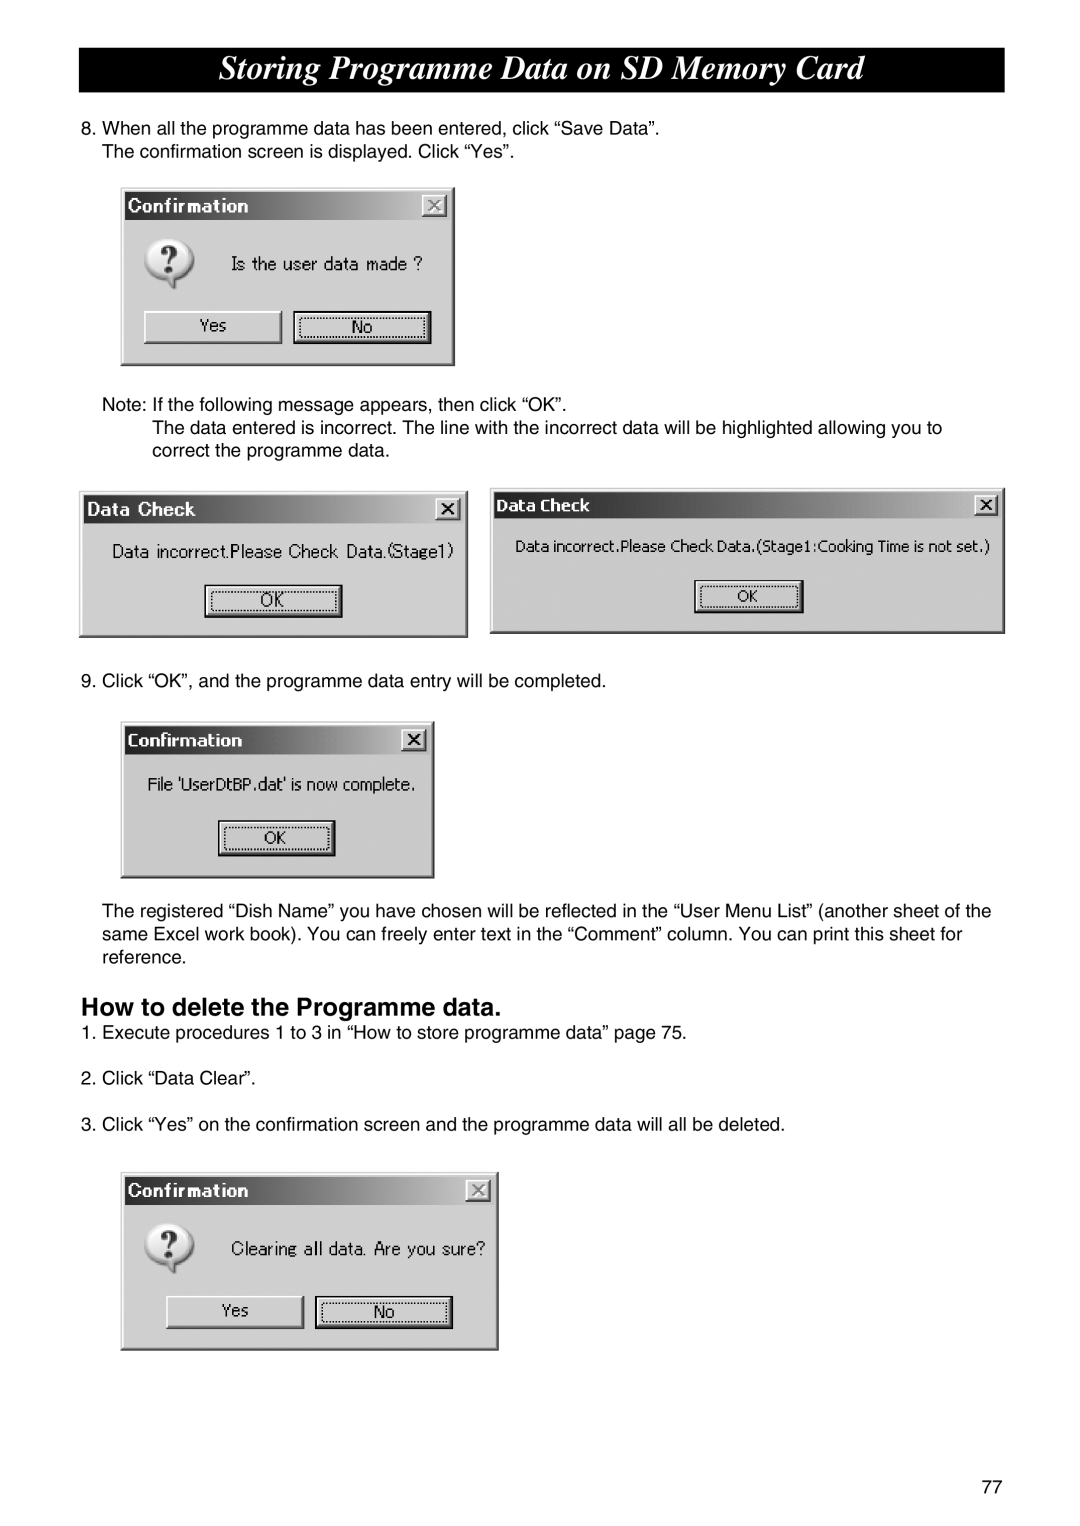 Panasonic NE-C1275 operating instructions How to delete the Programme data, Storing Programme Data on SD Memory Card 